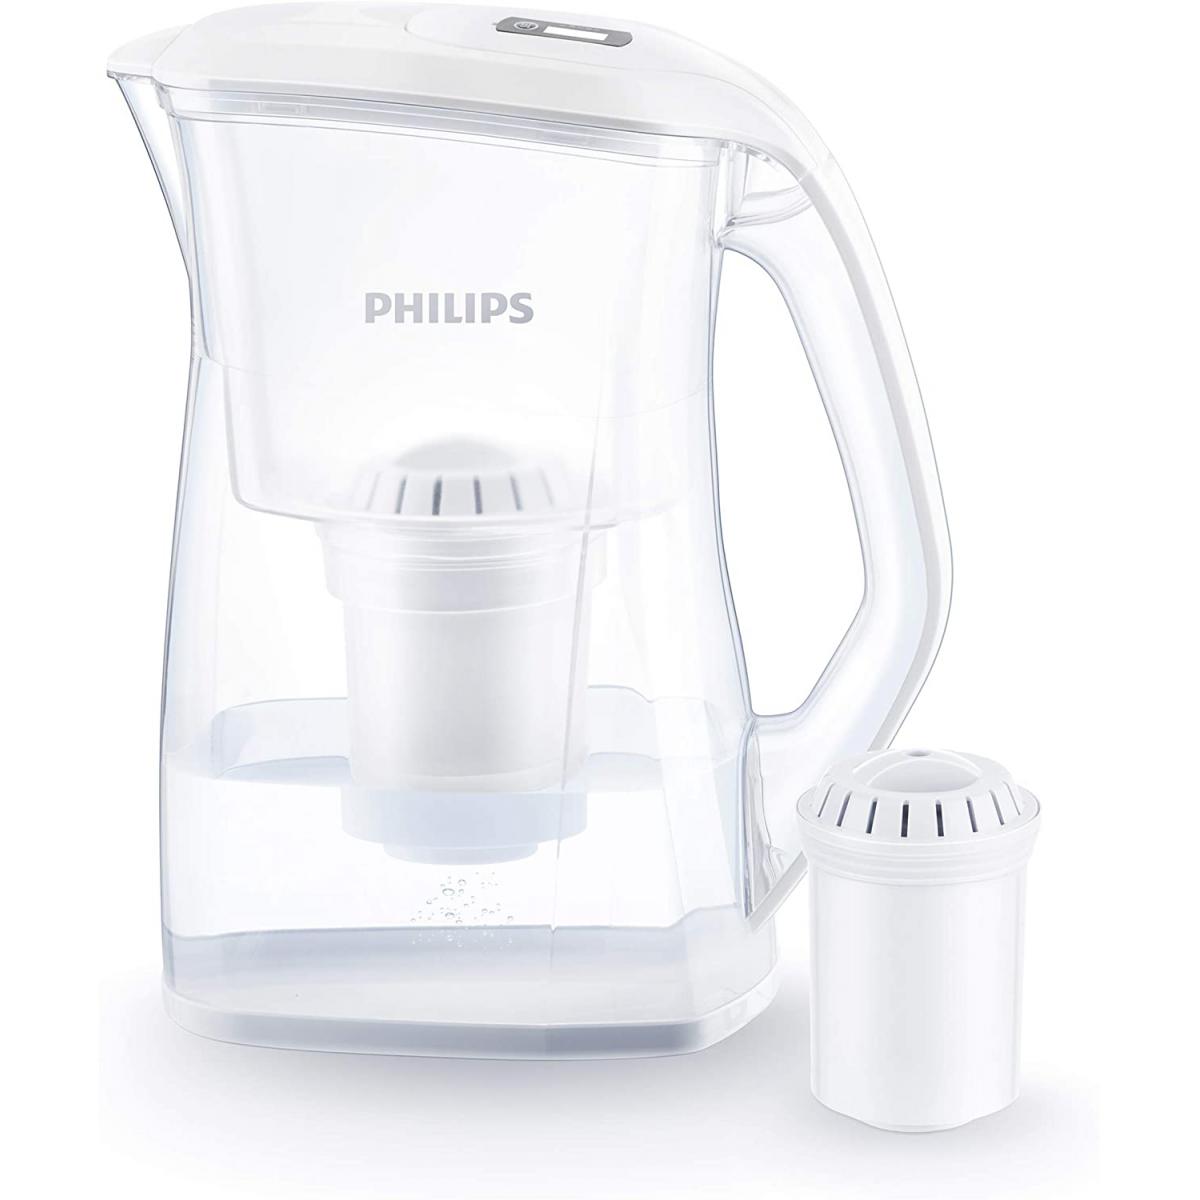 Philips Philips Wasserfilter-Karaffe Carafe Filtrante AWP2970 +1 Filtre-Ultrafiltration Bactéries, Calcaire, Chlore, Plomb et Pesticides, Blanc